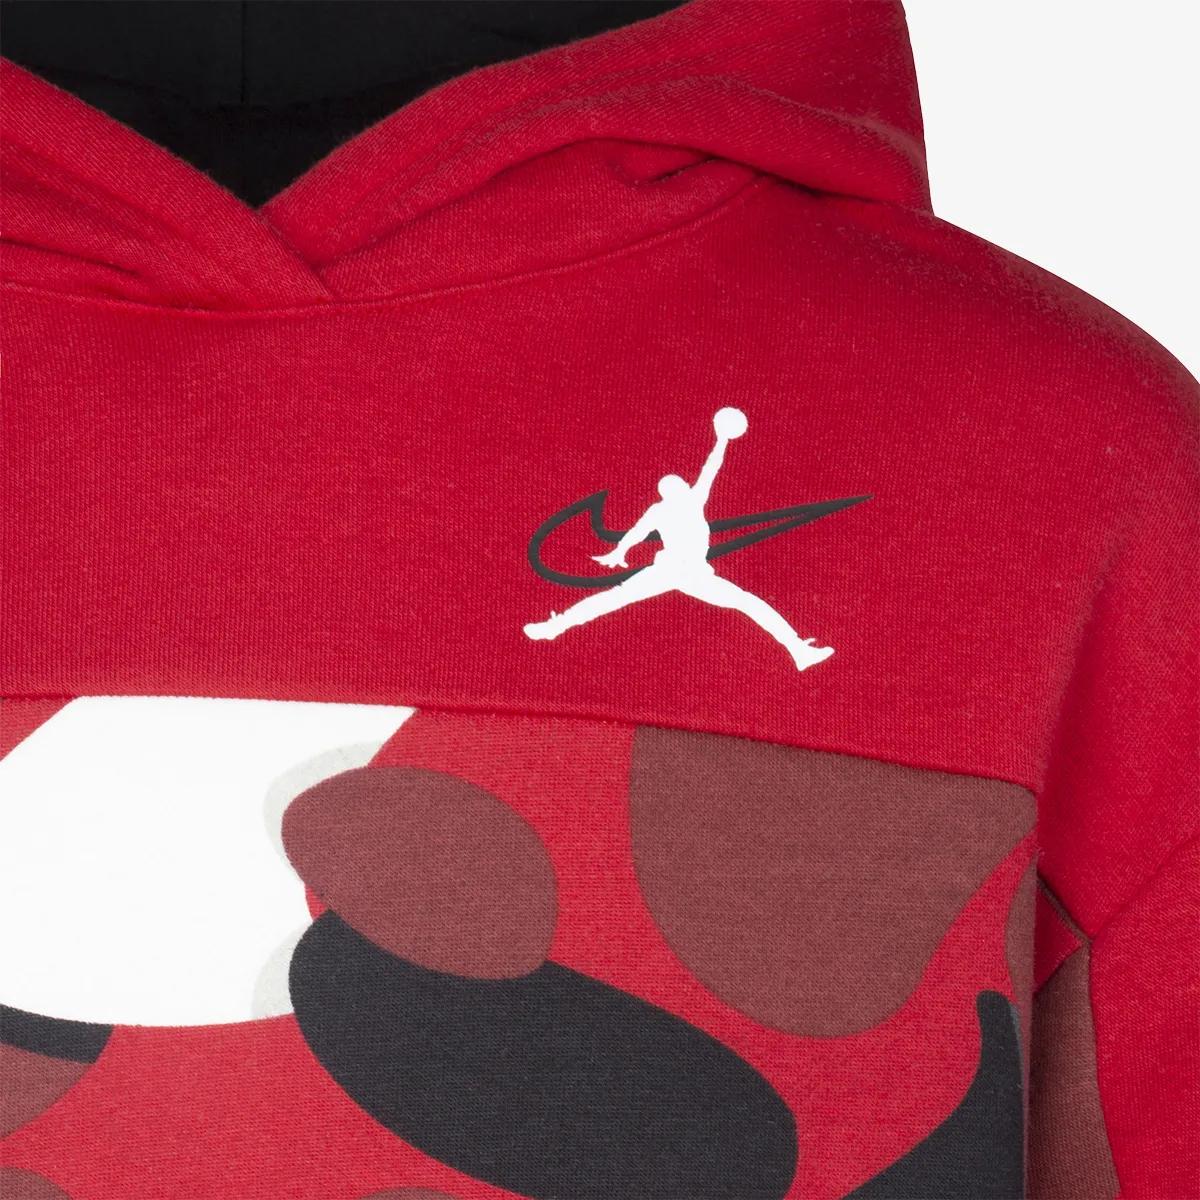 Nike Hanorac Jordan Colorblocked 